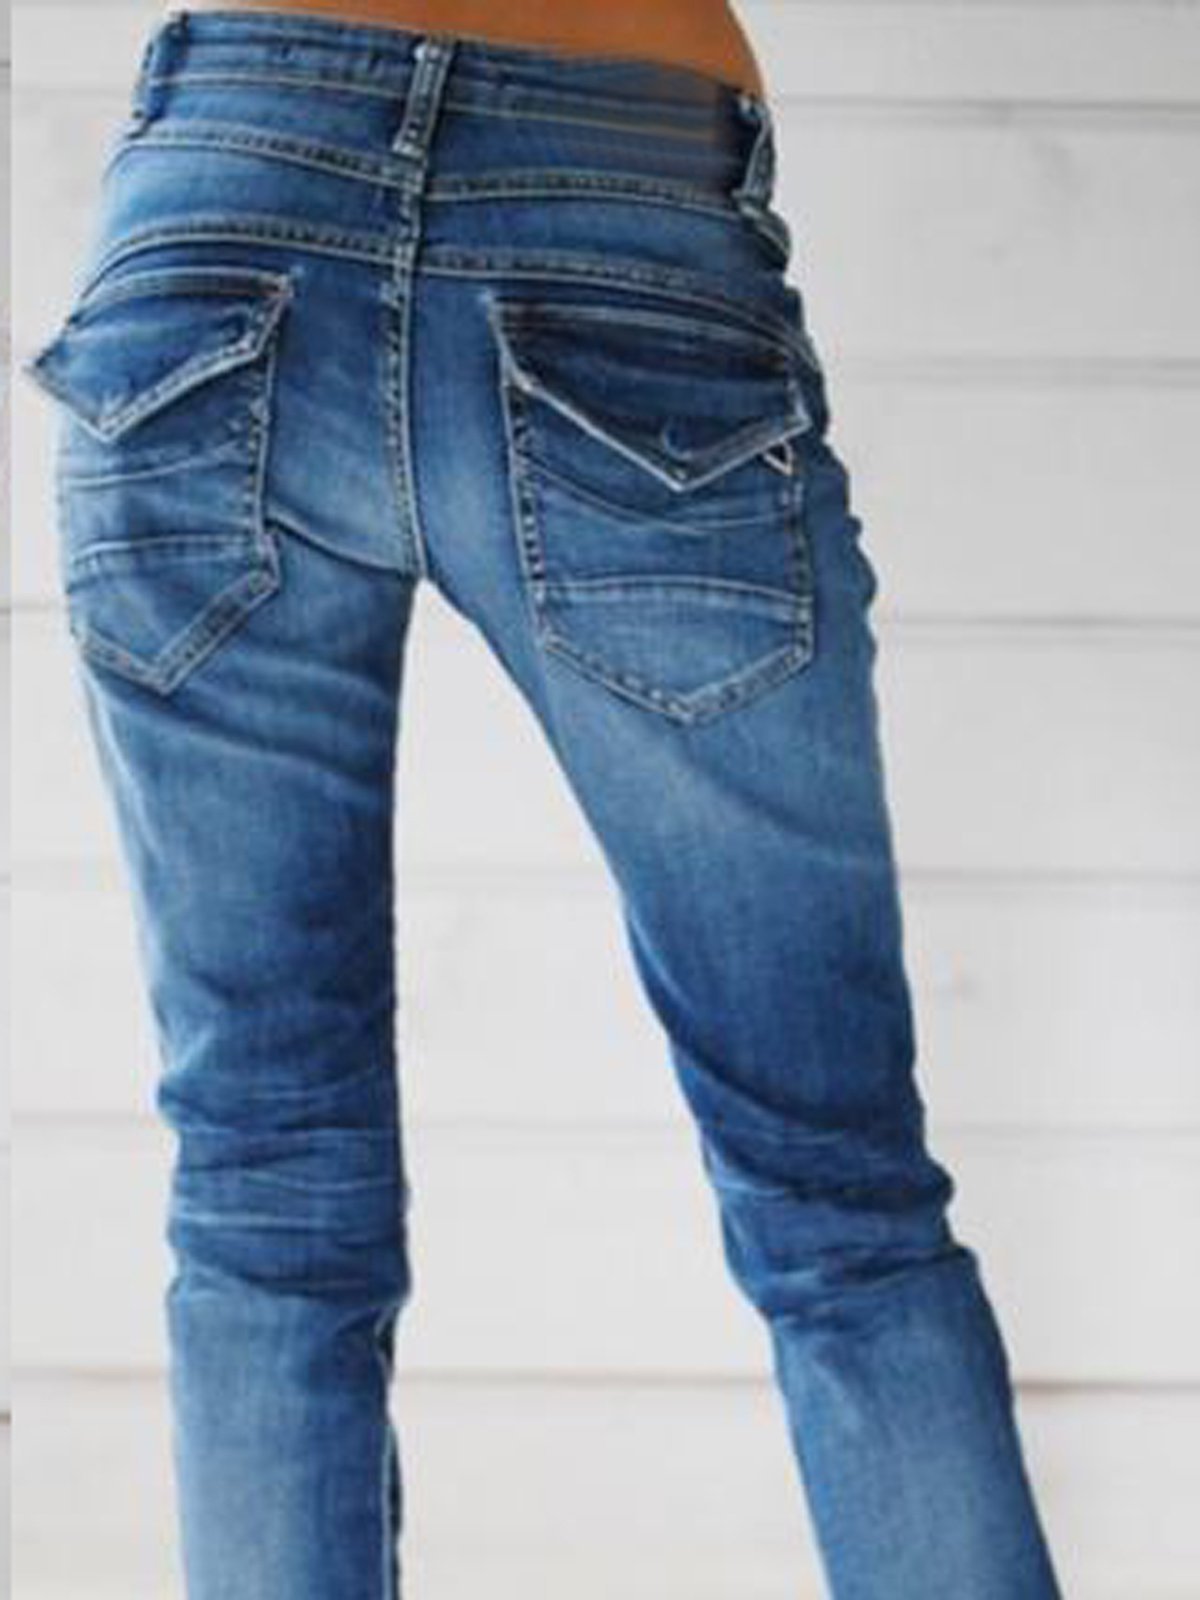 Casual Denim Jeans